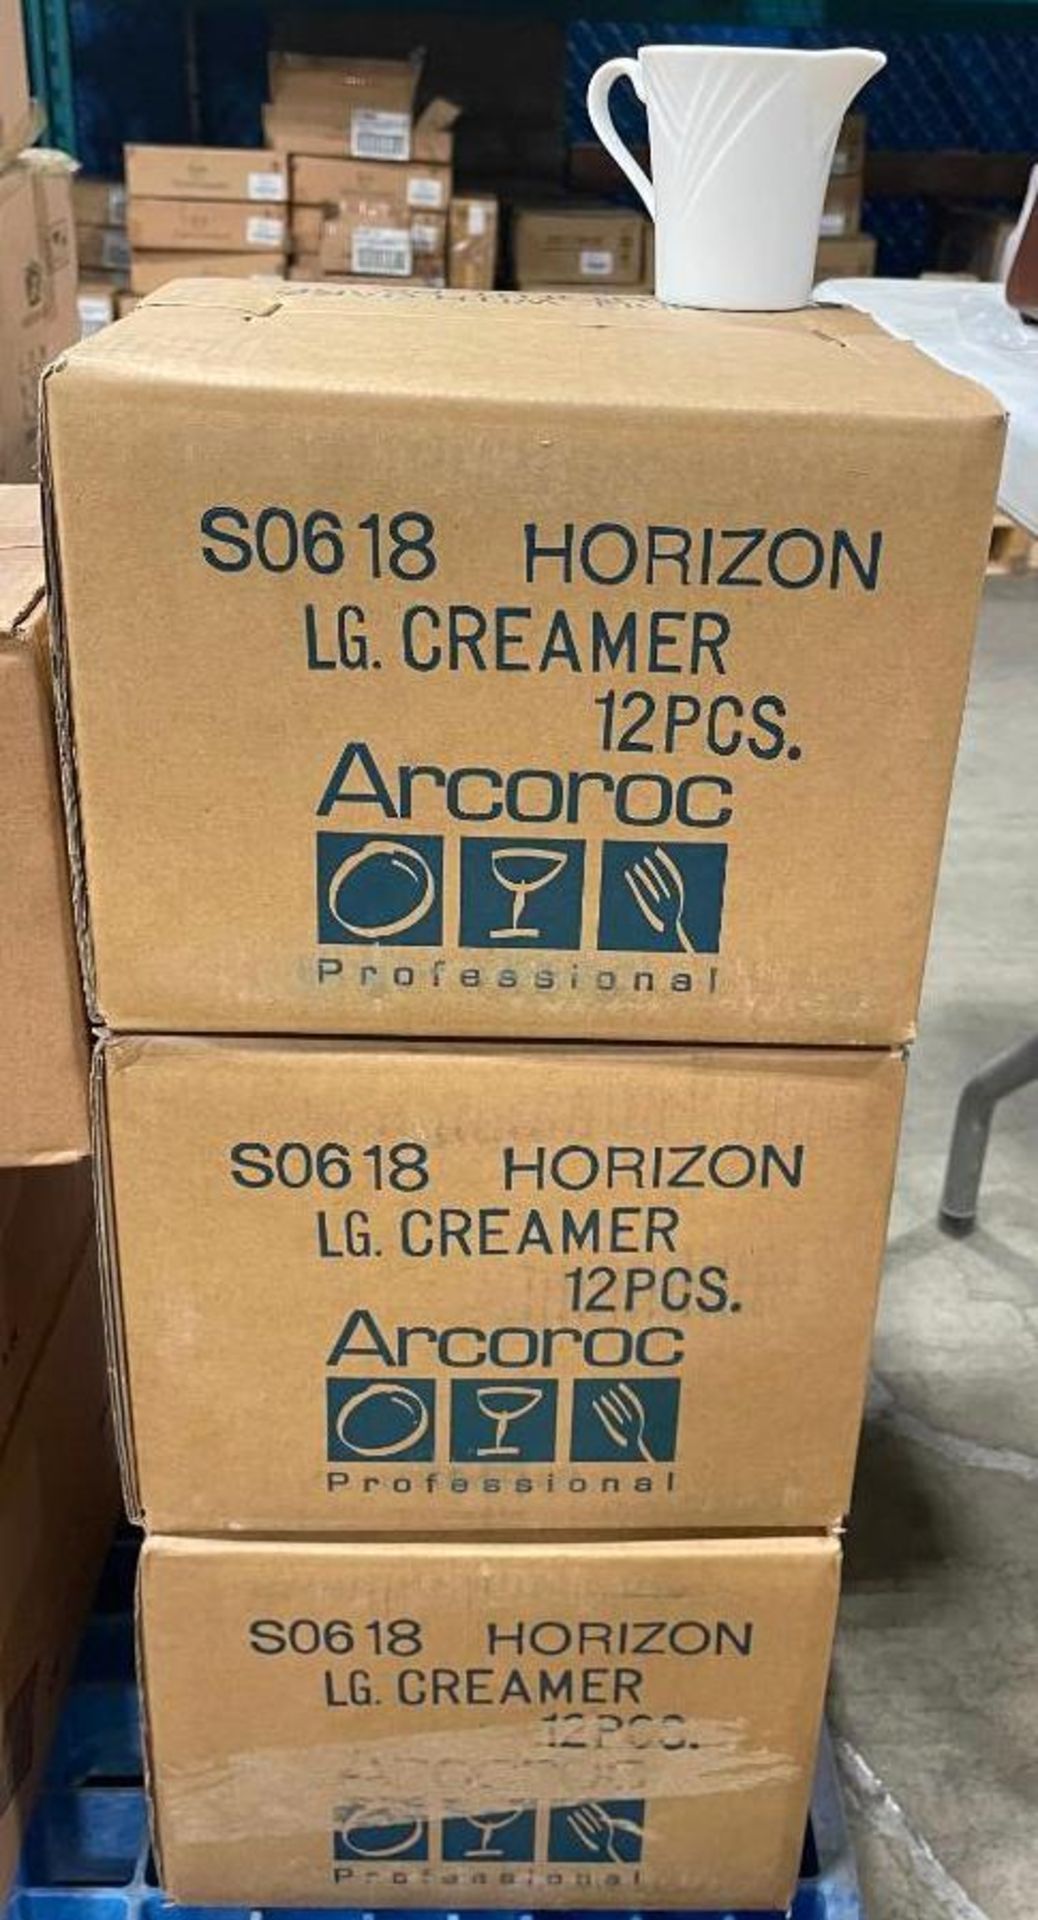 3 CASES OF ARCOROC S0618 HORIZON 9.5 OZ. WHITE PORCELAIN CREAMER - 12/CASE - NEW - Image 2 of 4